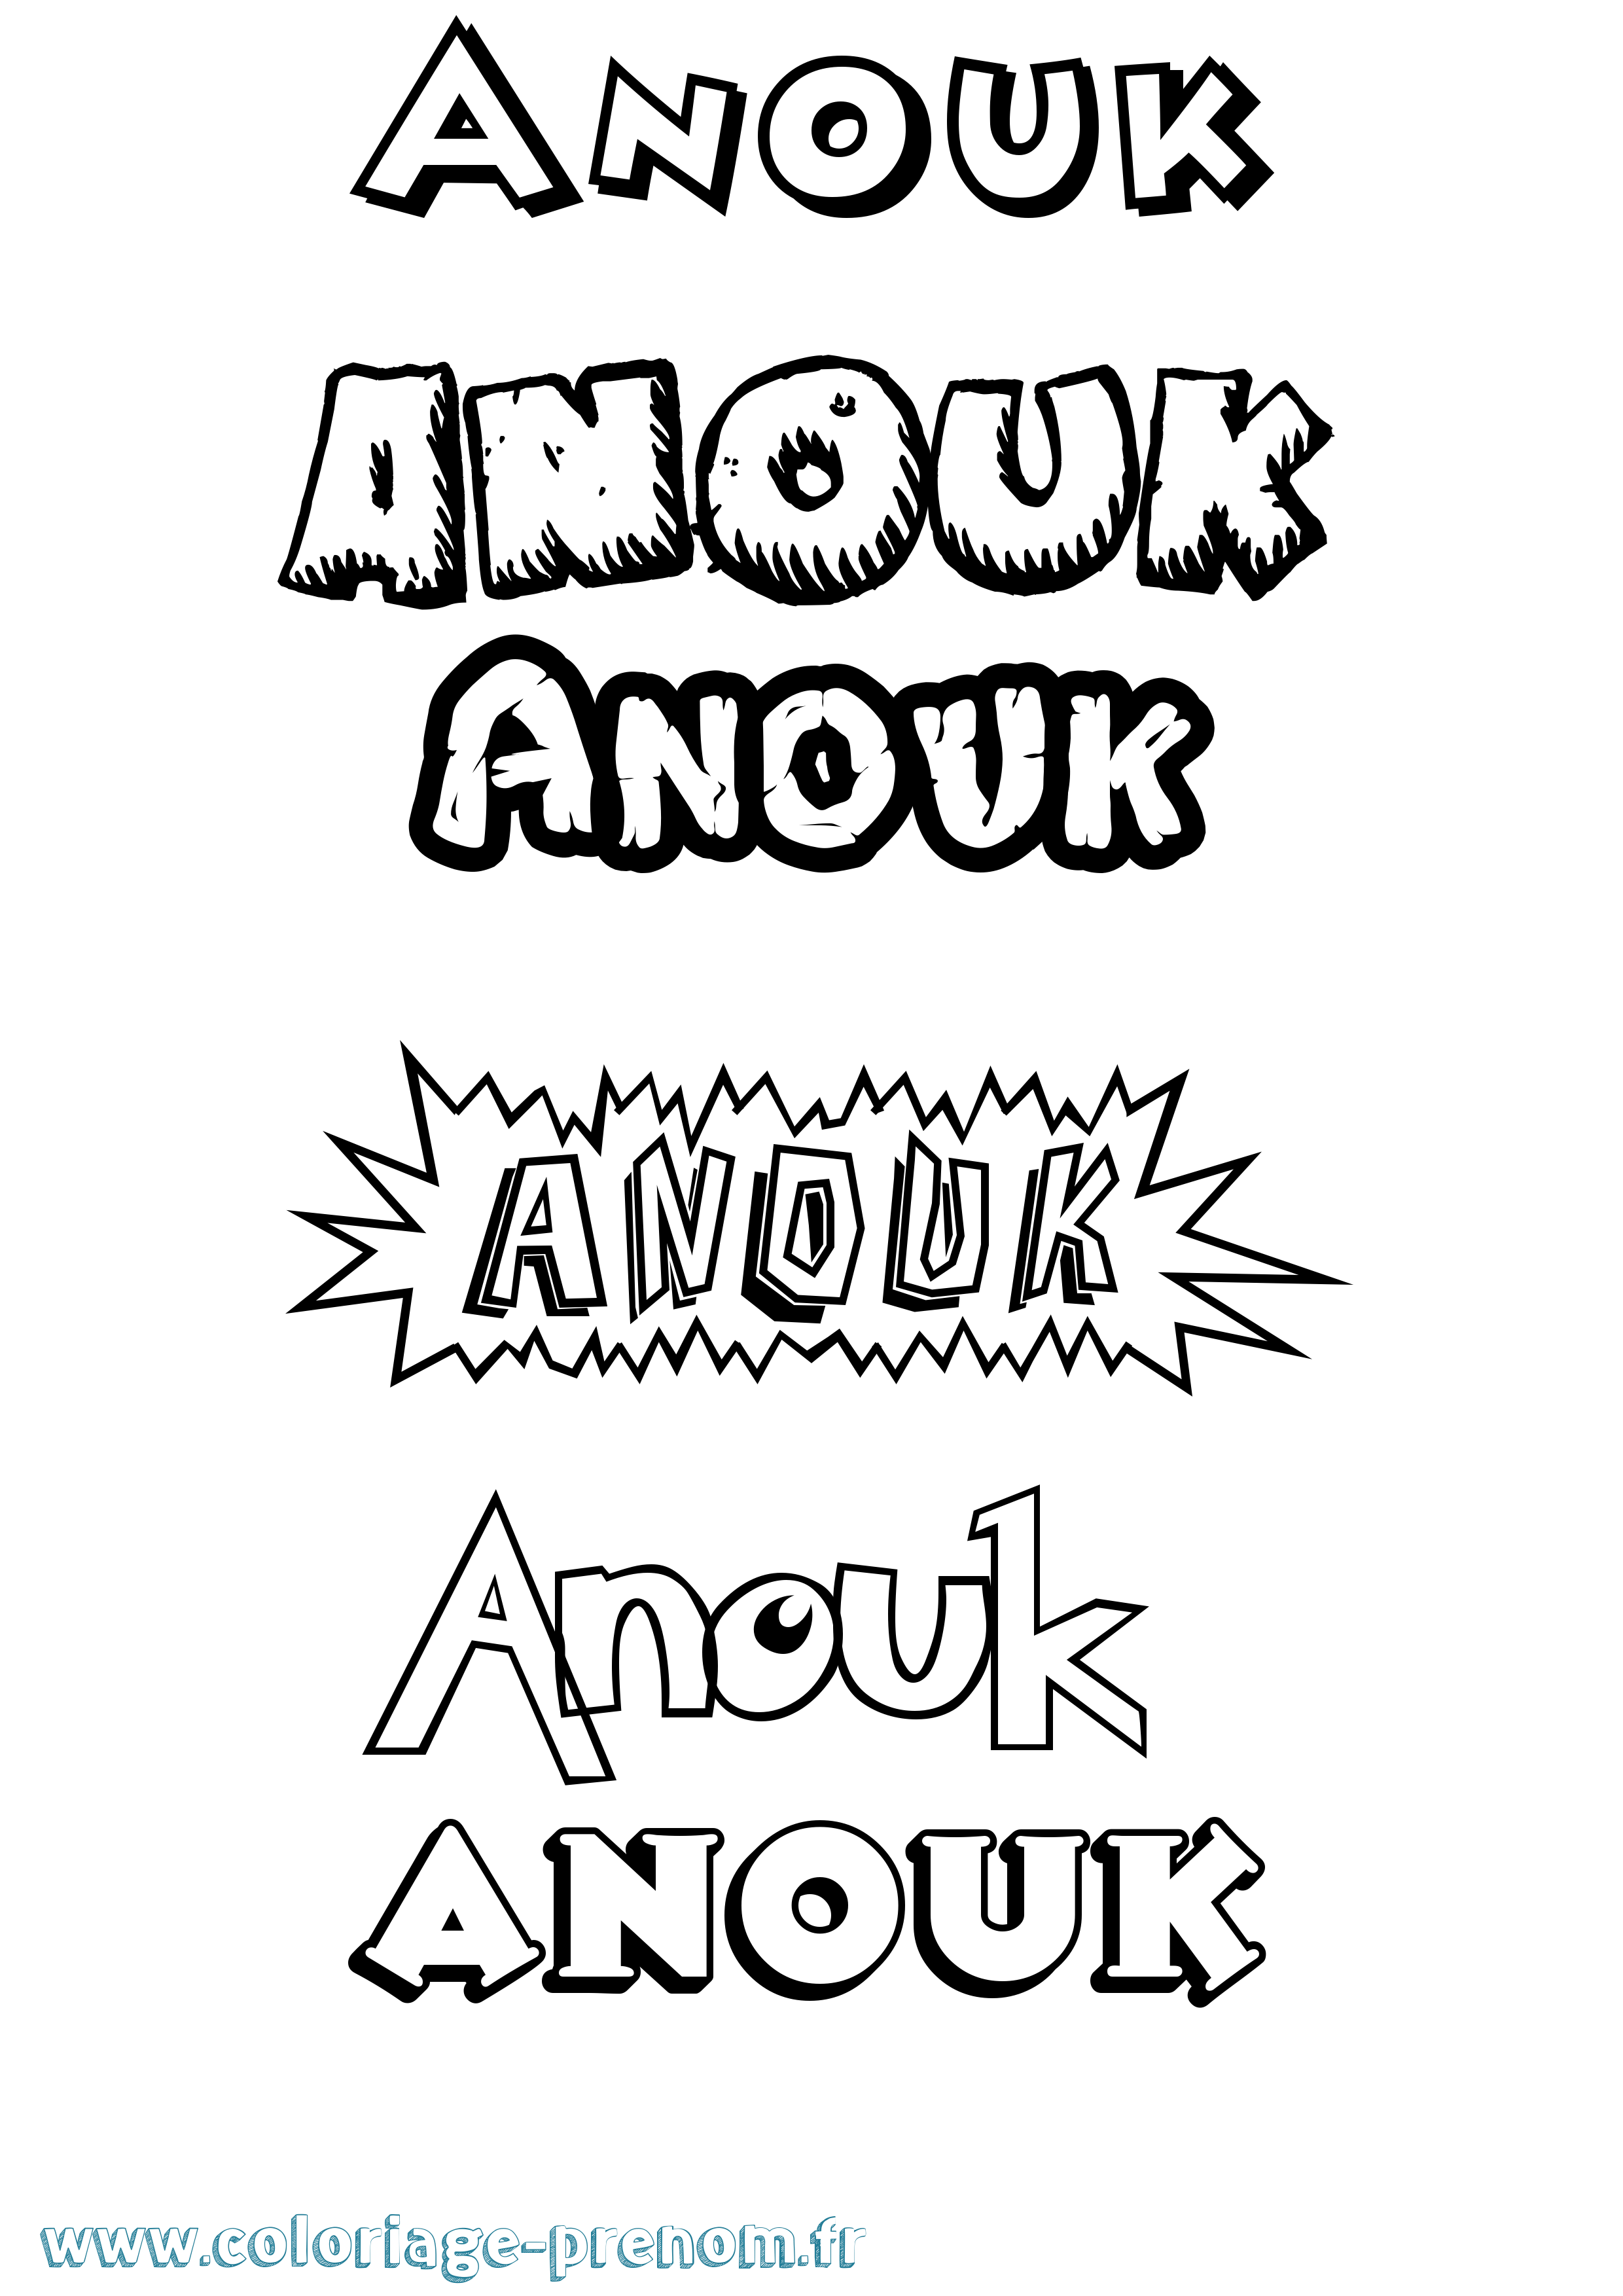 Coloriage prénom Anouk